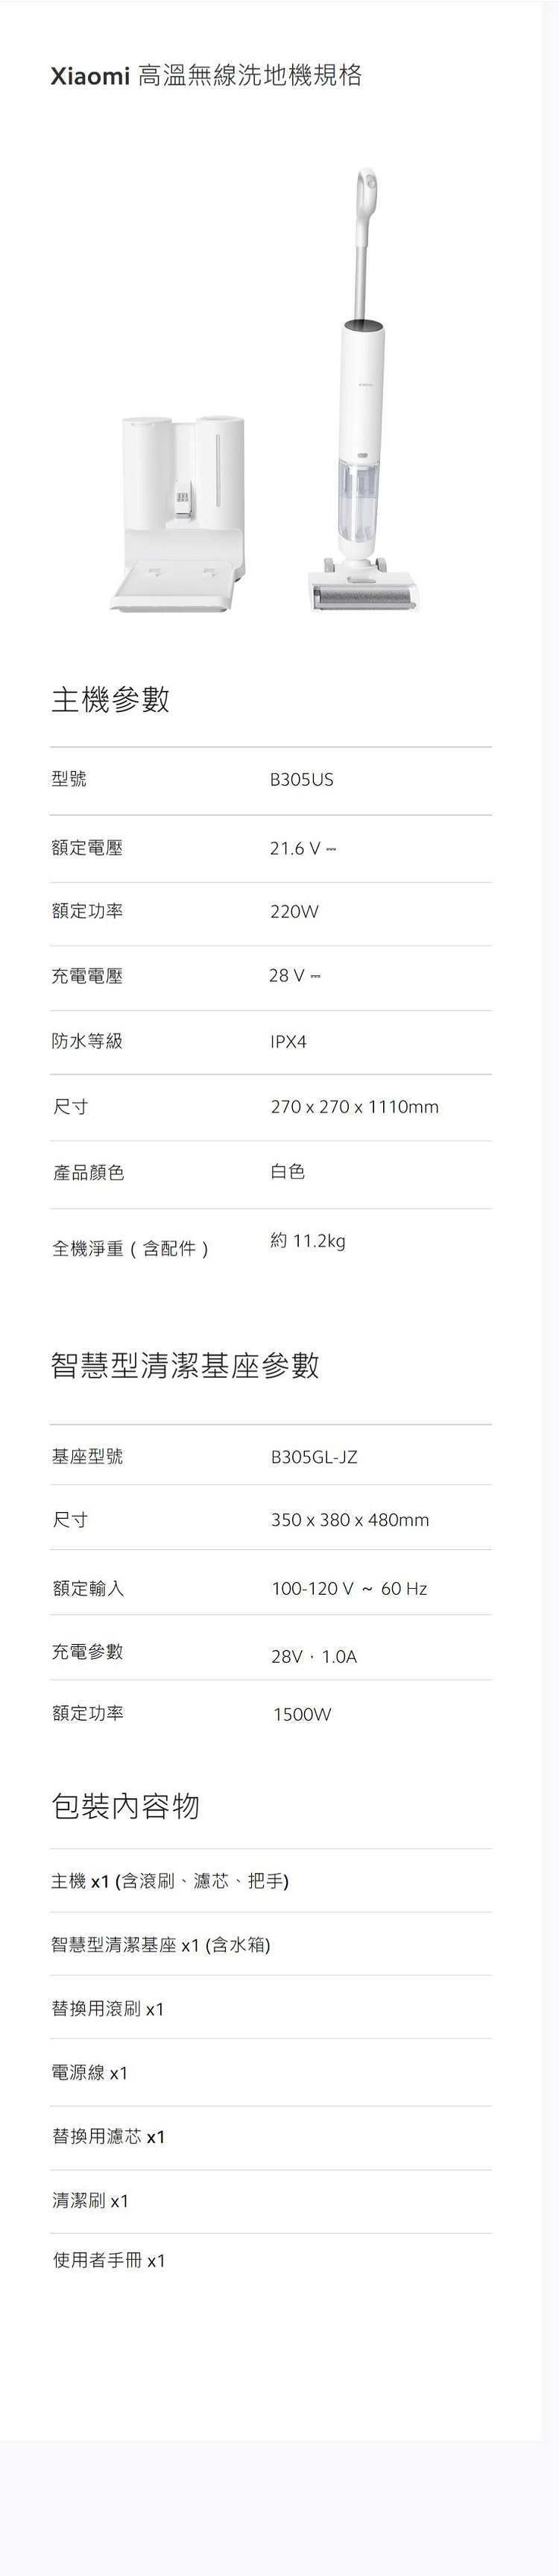 Xiaomi 高溫無線洗地機規格主機參數型號B305US額定電壓21.6  額定功率220W充電電壓28 防水等級IPX4尺寸產品顏色270 x 270 x 1110mm白色約 11.2kg全機淨重(含配件)智慧型清潔基座參數基座型號尺寸額定輸入B305GL-JZ350 x 380 x 480mm100-120V ~ 充電參數28V,1.0A額定功率1500W包裝內容物主機(含滾刷、濾芯、把手)智慧型清潔基座x1(含水箱)替換用滾刷x1電源線 x1替換用濾芯 x1清潔刷 x1使用者手冊x1